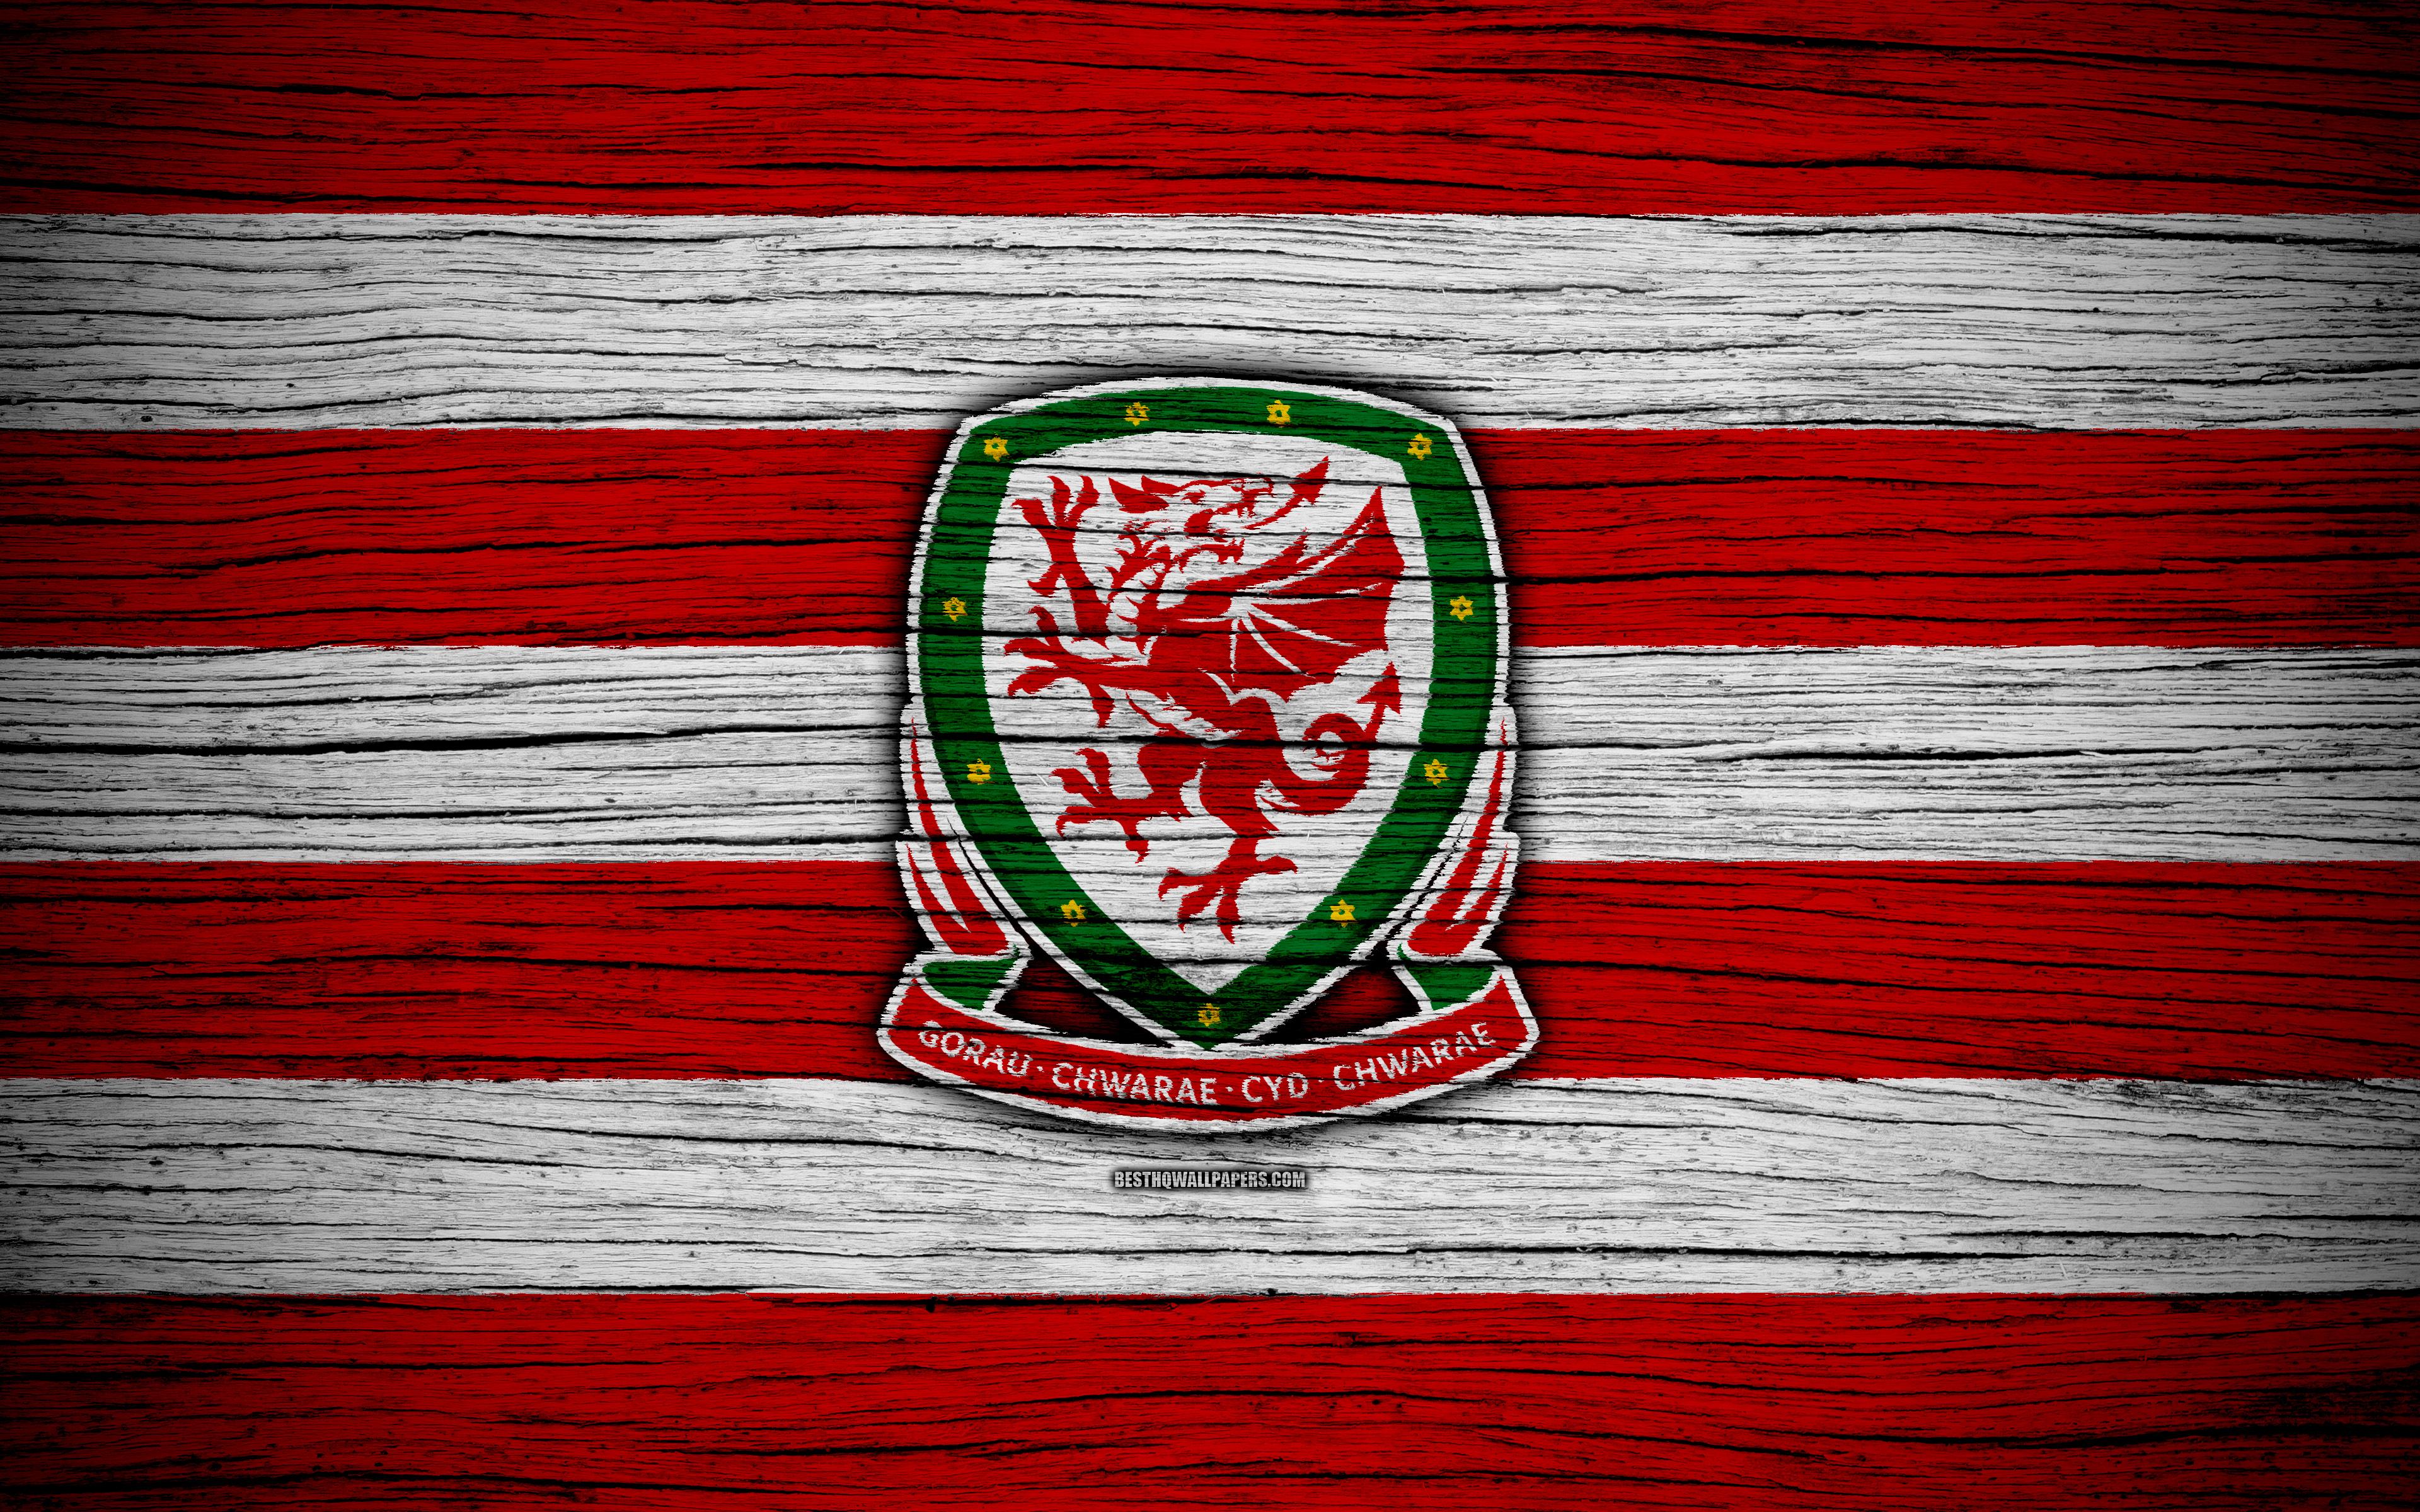 Download wallpaper 4k, Wales national football team, logo, UEFA